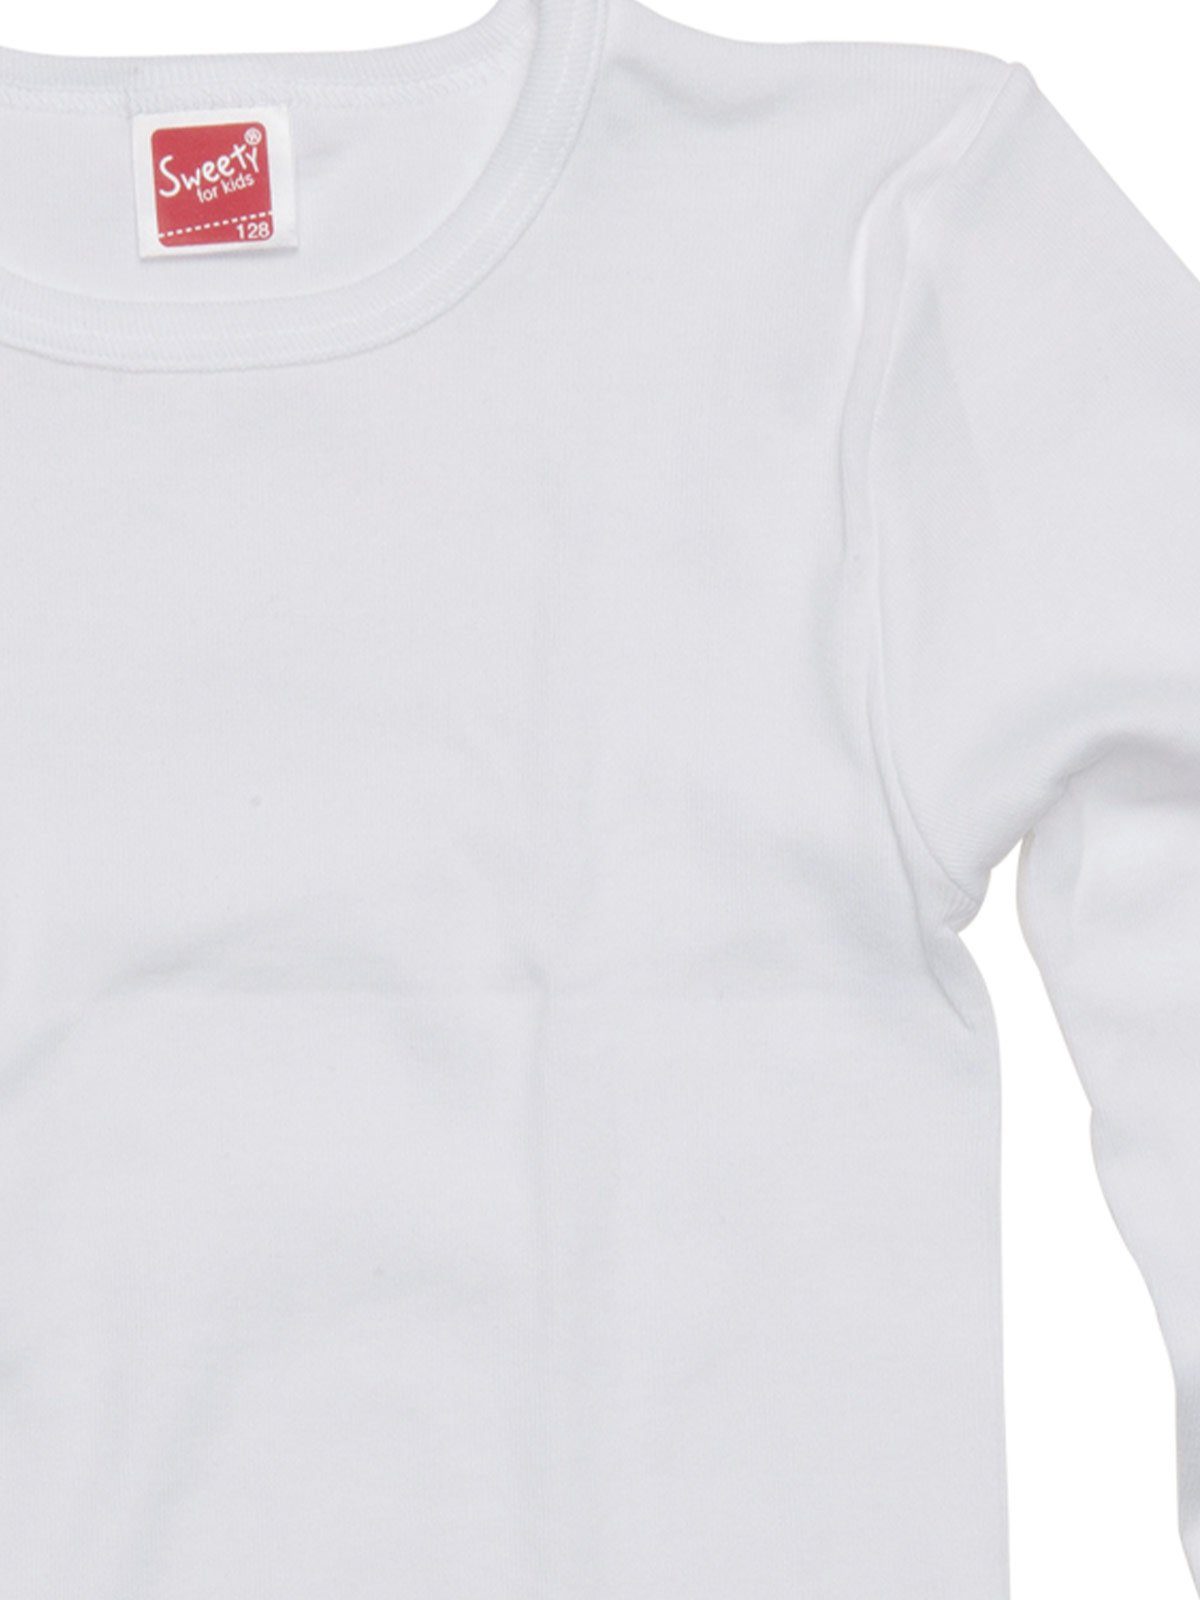 Kids Markenqualität for Kinder Sweety Winterwäsche (Stück, 1-St) Achselhemd Shirt hohe weiss